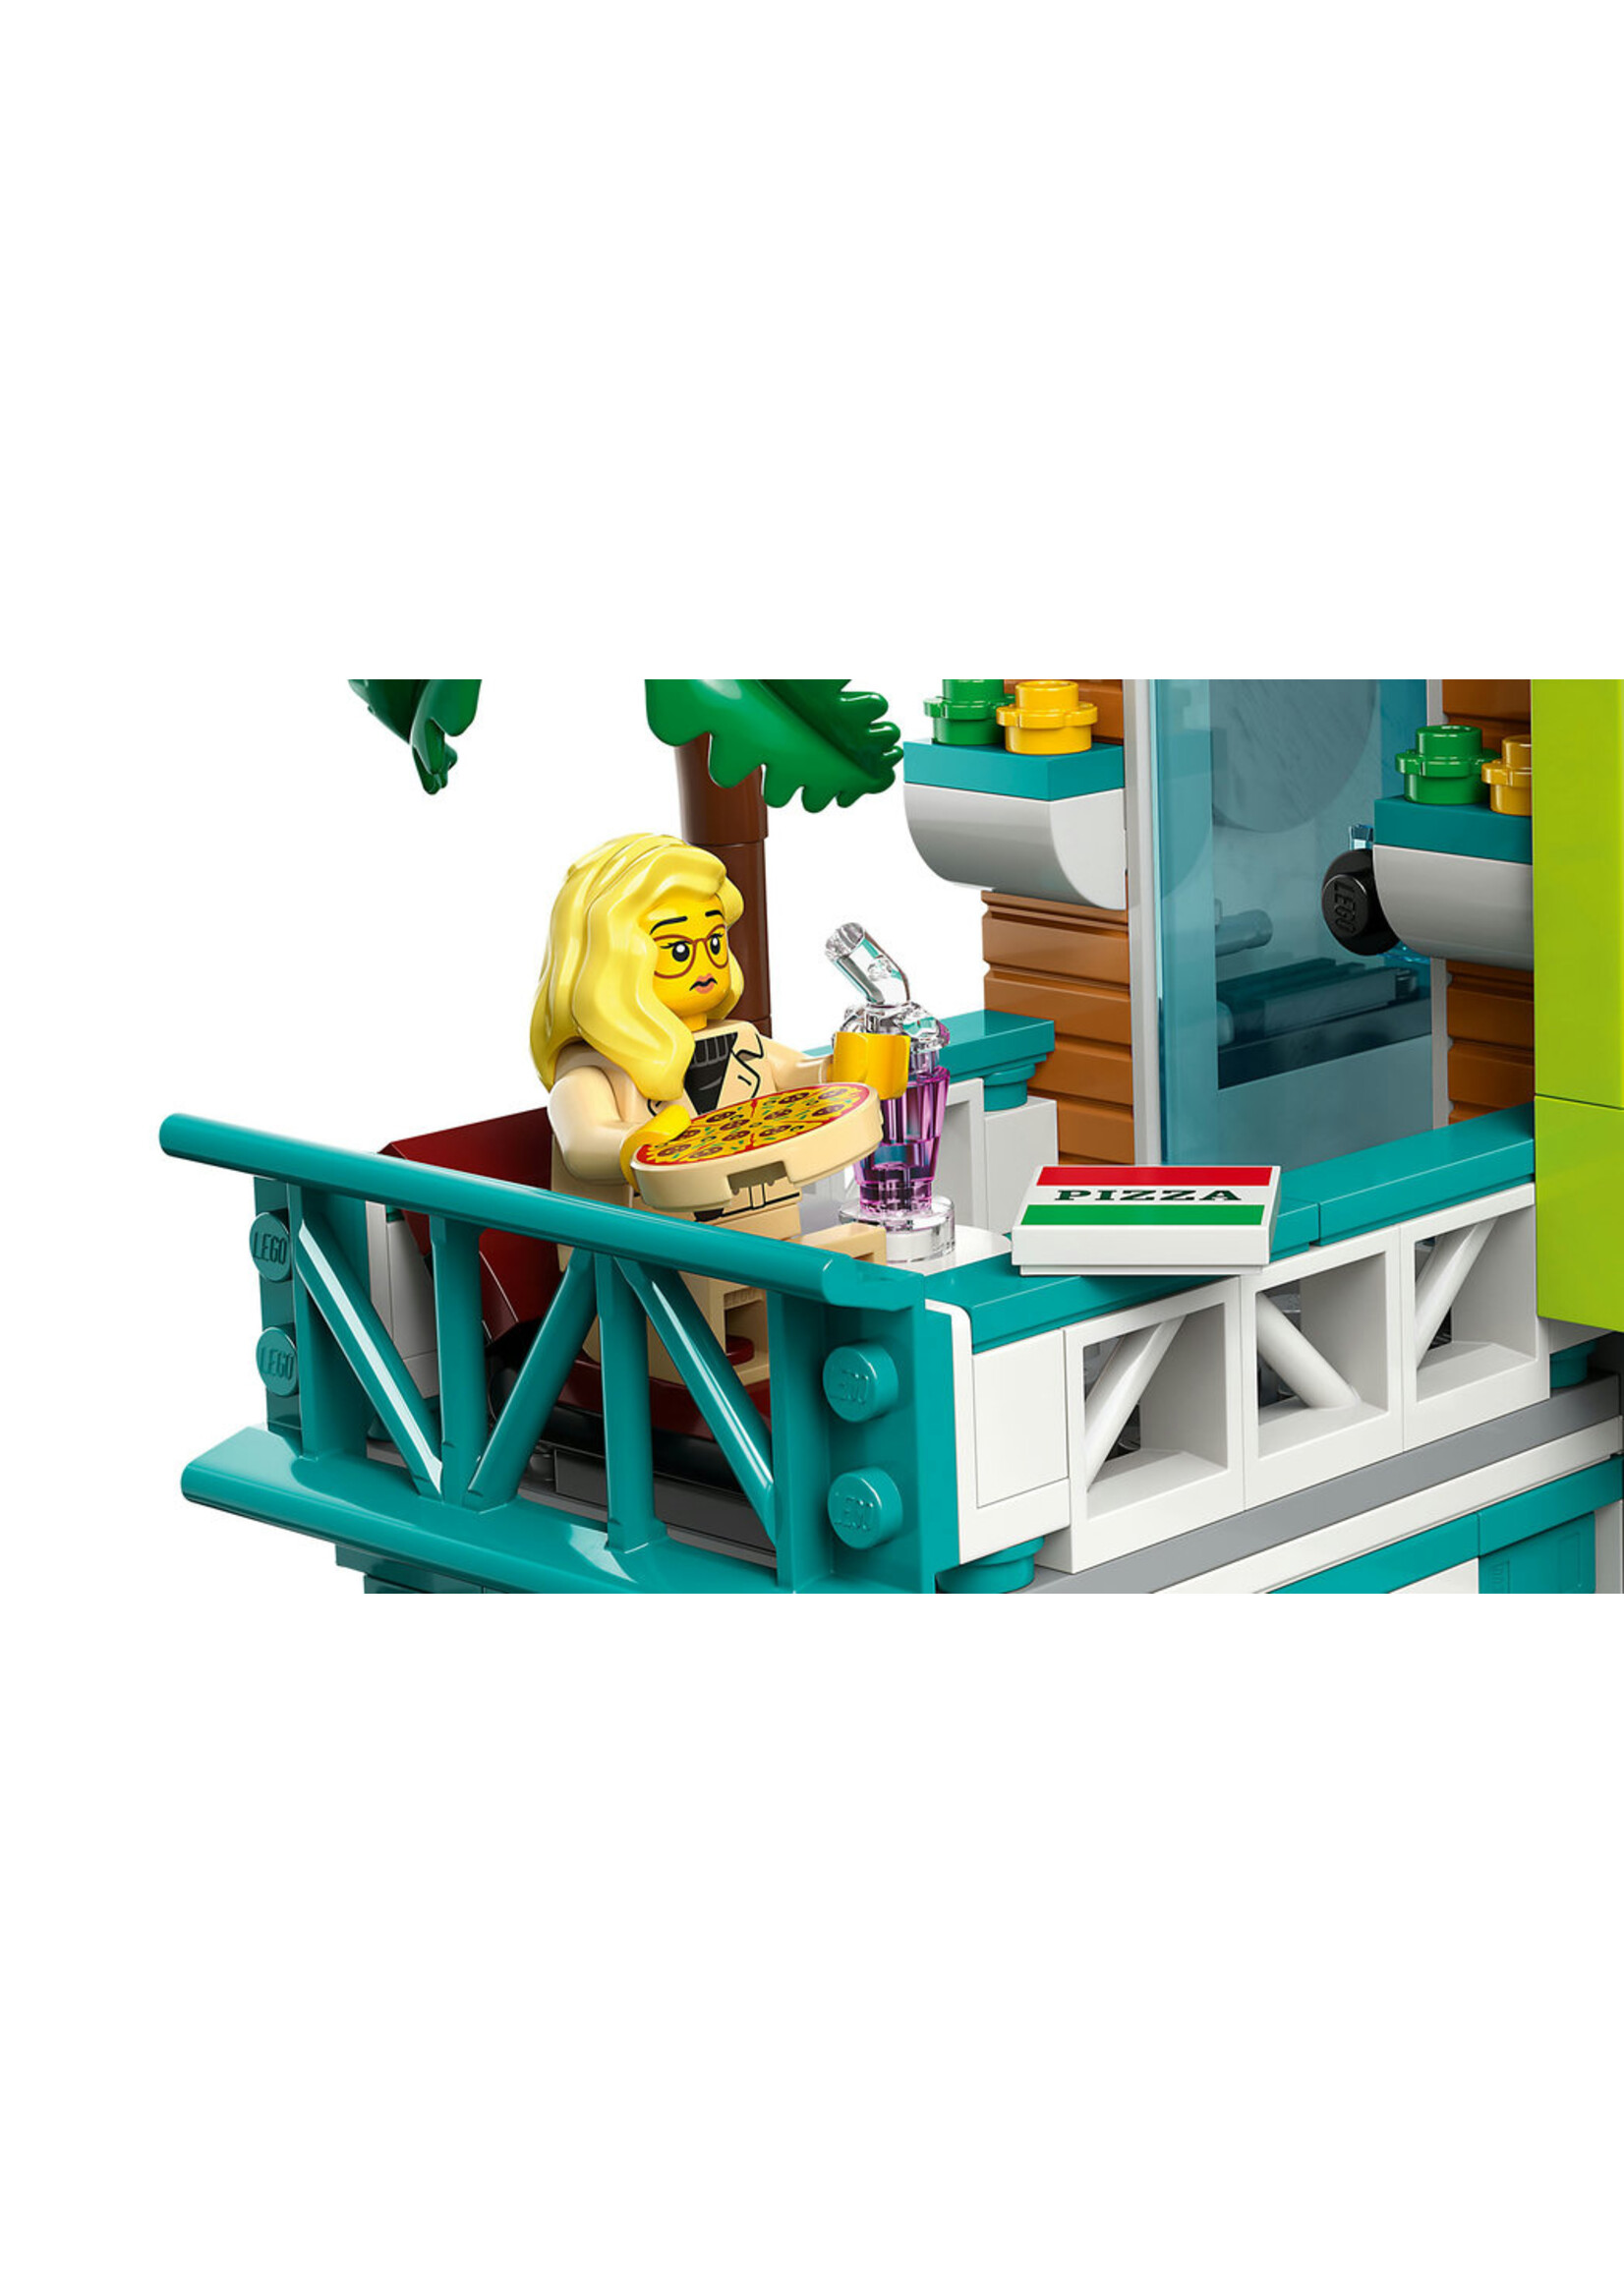 LEGO 60380 - Downtown